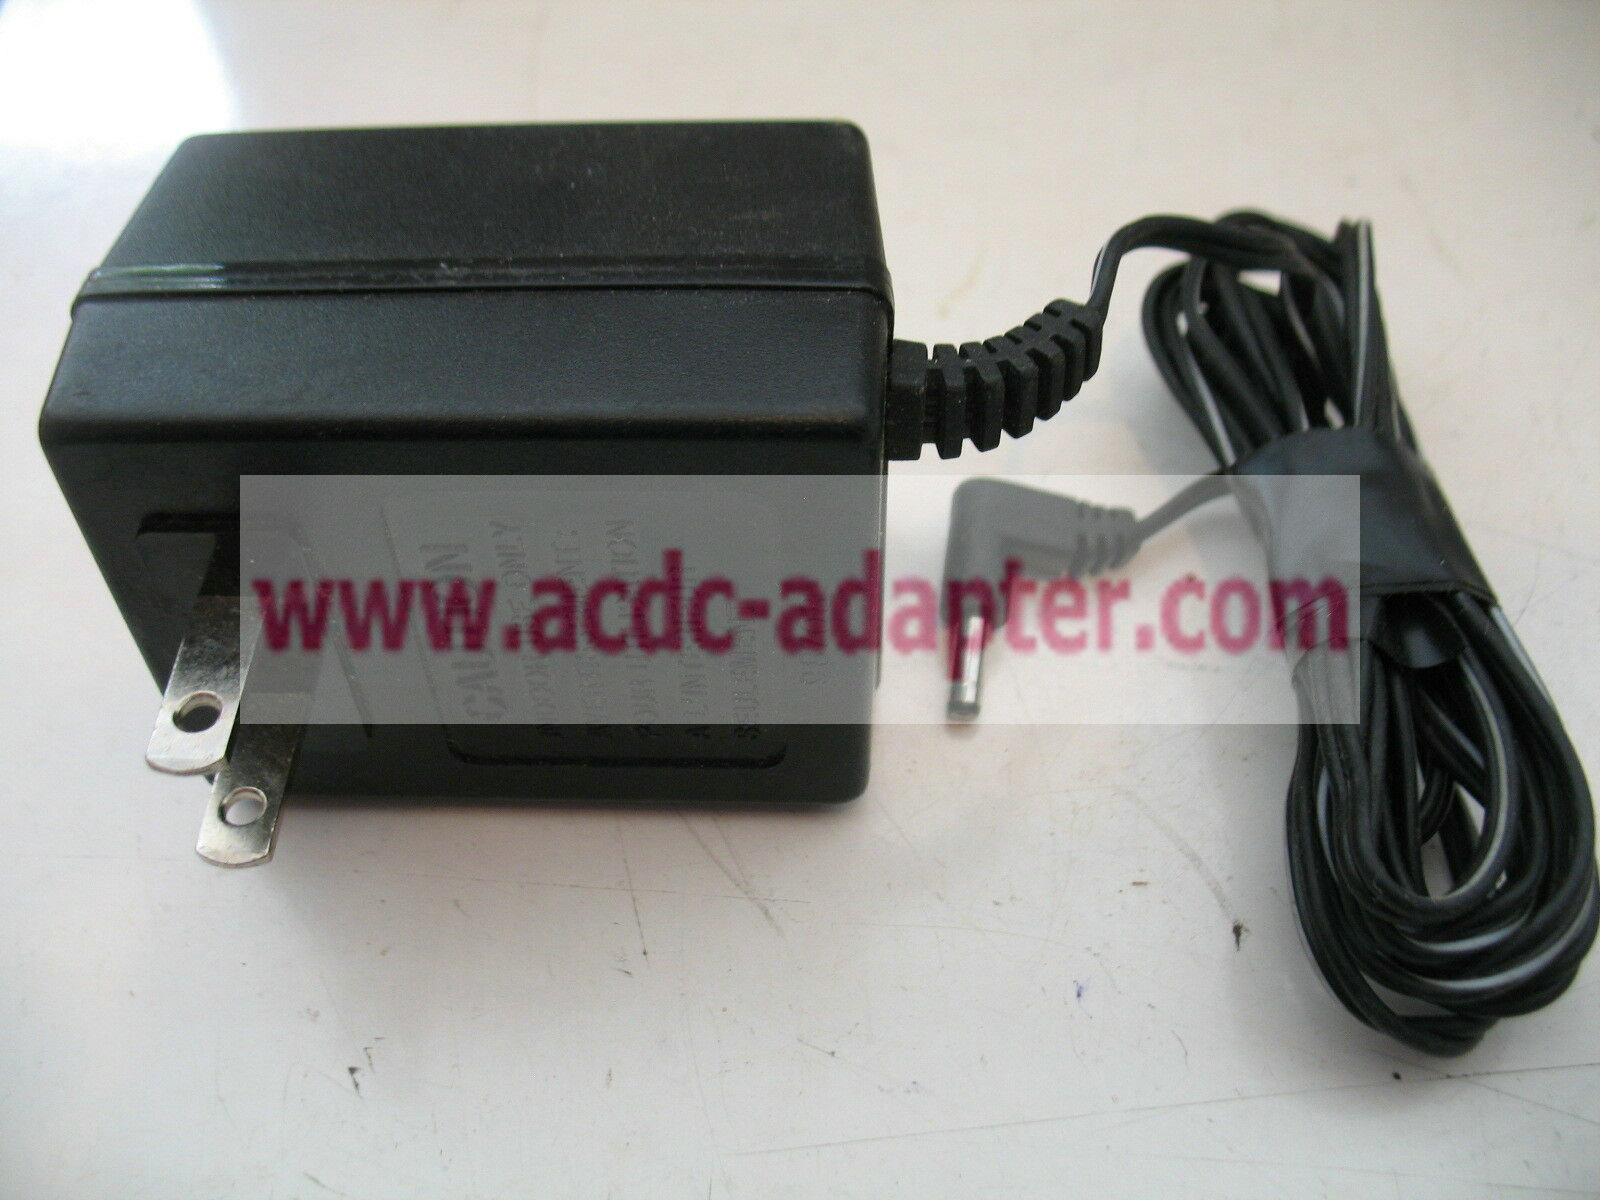 Genuine VTech 26-0142-02-08 Component Telephone Power Supply 11V 550mA AC Adapter